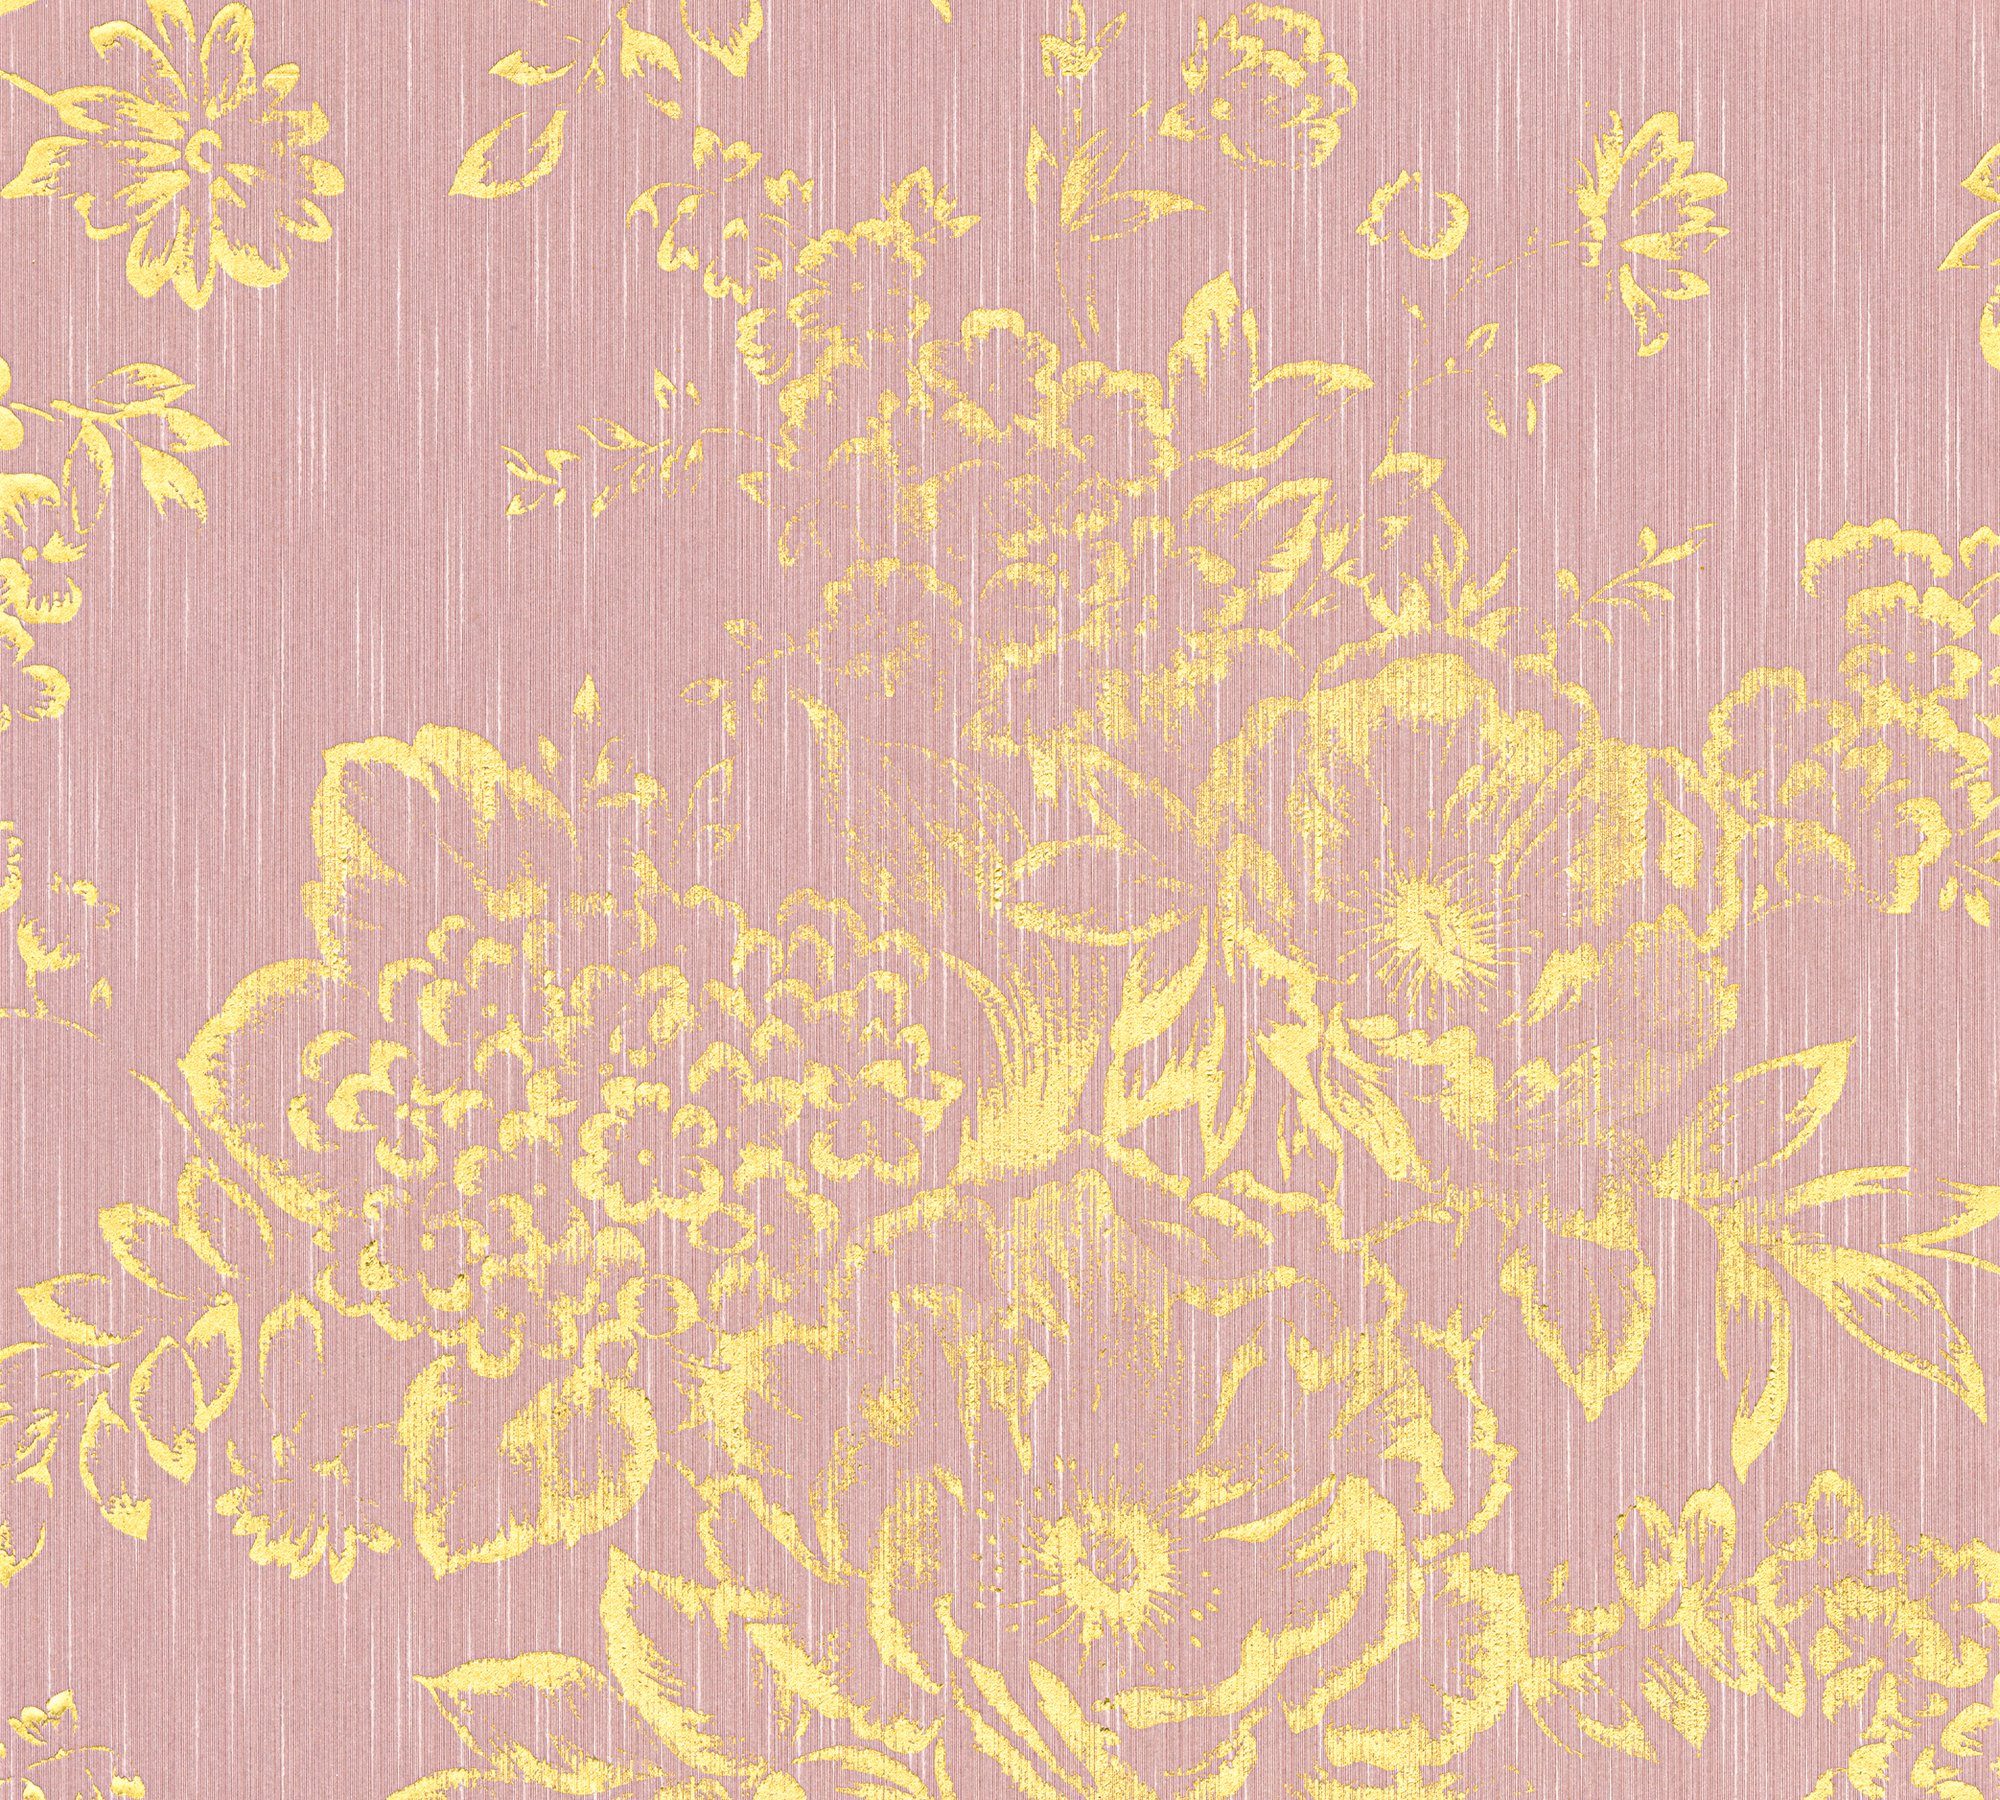 Metallic gold/rosa Blumen matt, glänzend, Architects floral, Création Silk, Barocktapete samtig, Tapete Paper A.S. Textiltapete